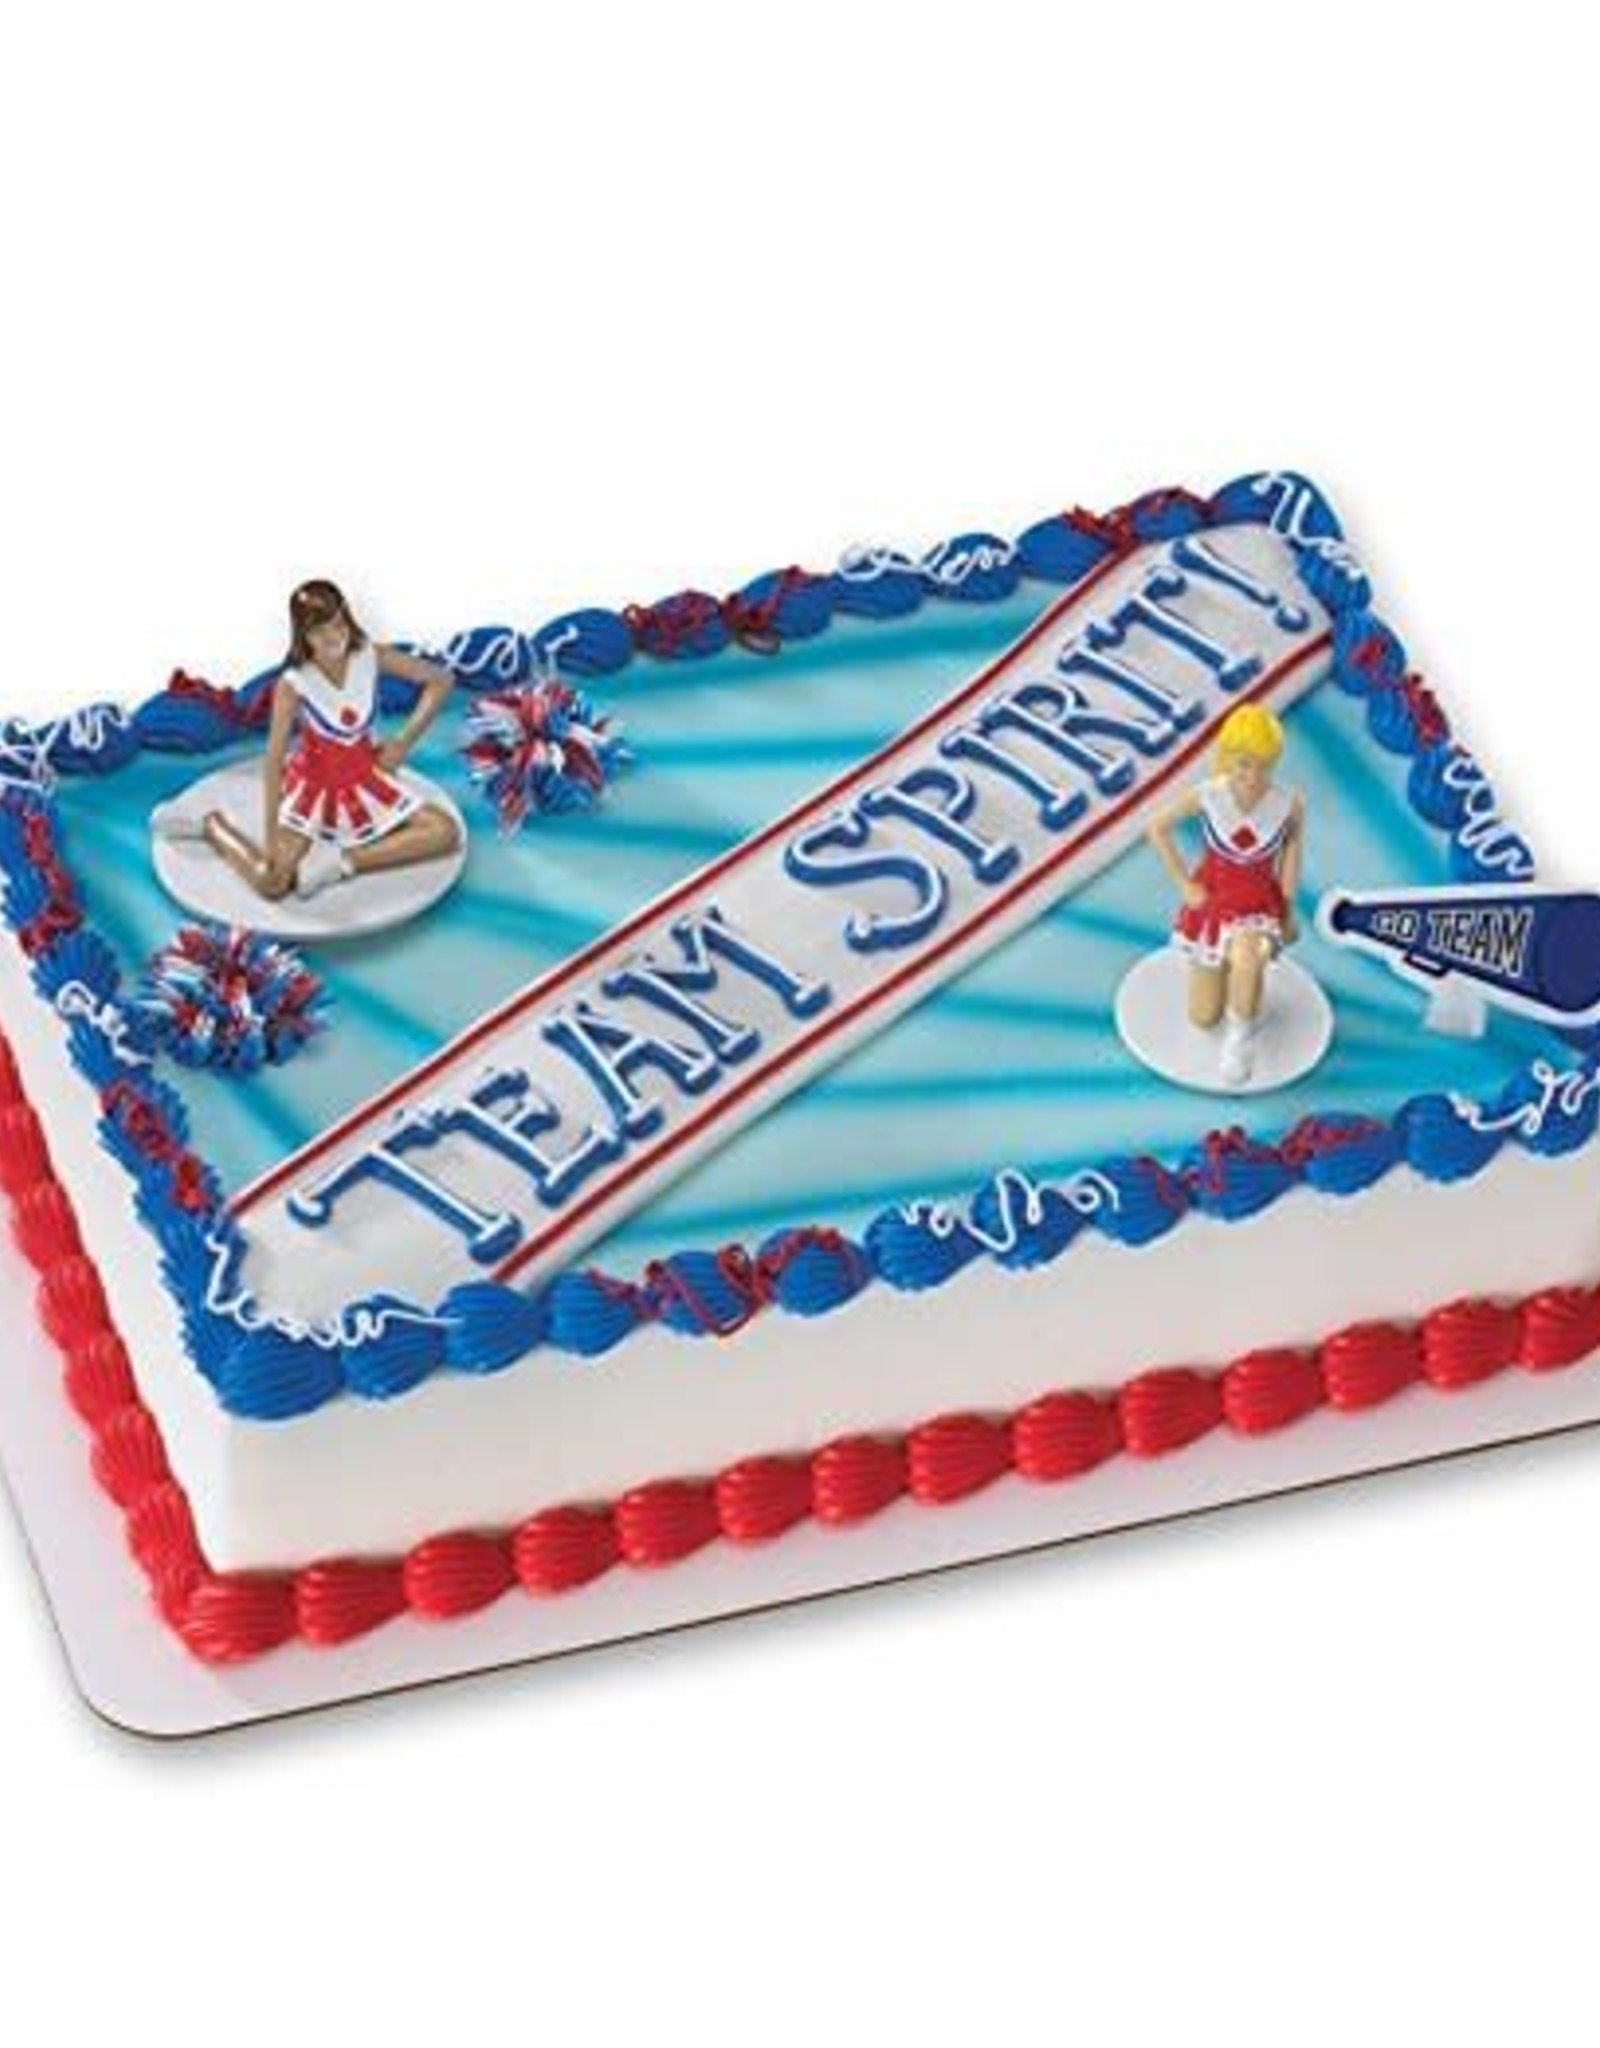 Cheerleading Cake Topper Set